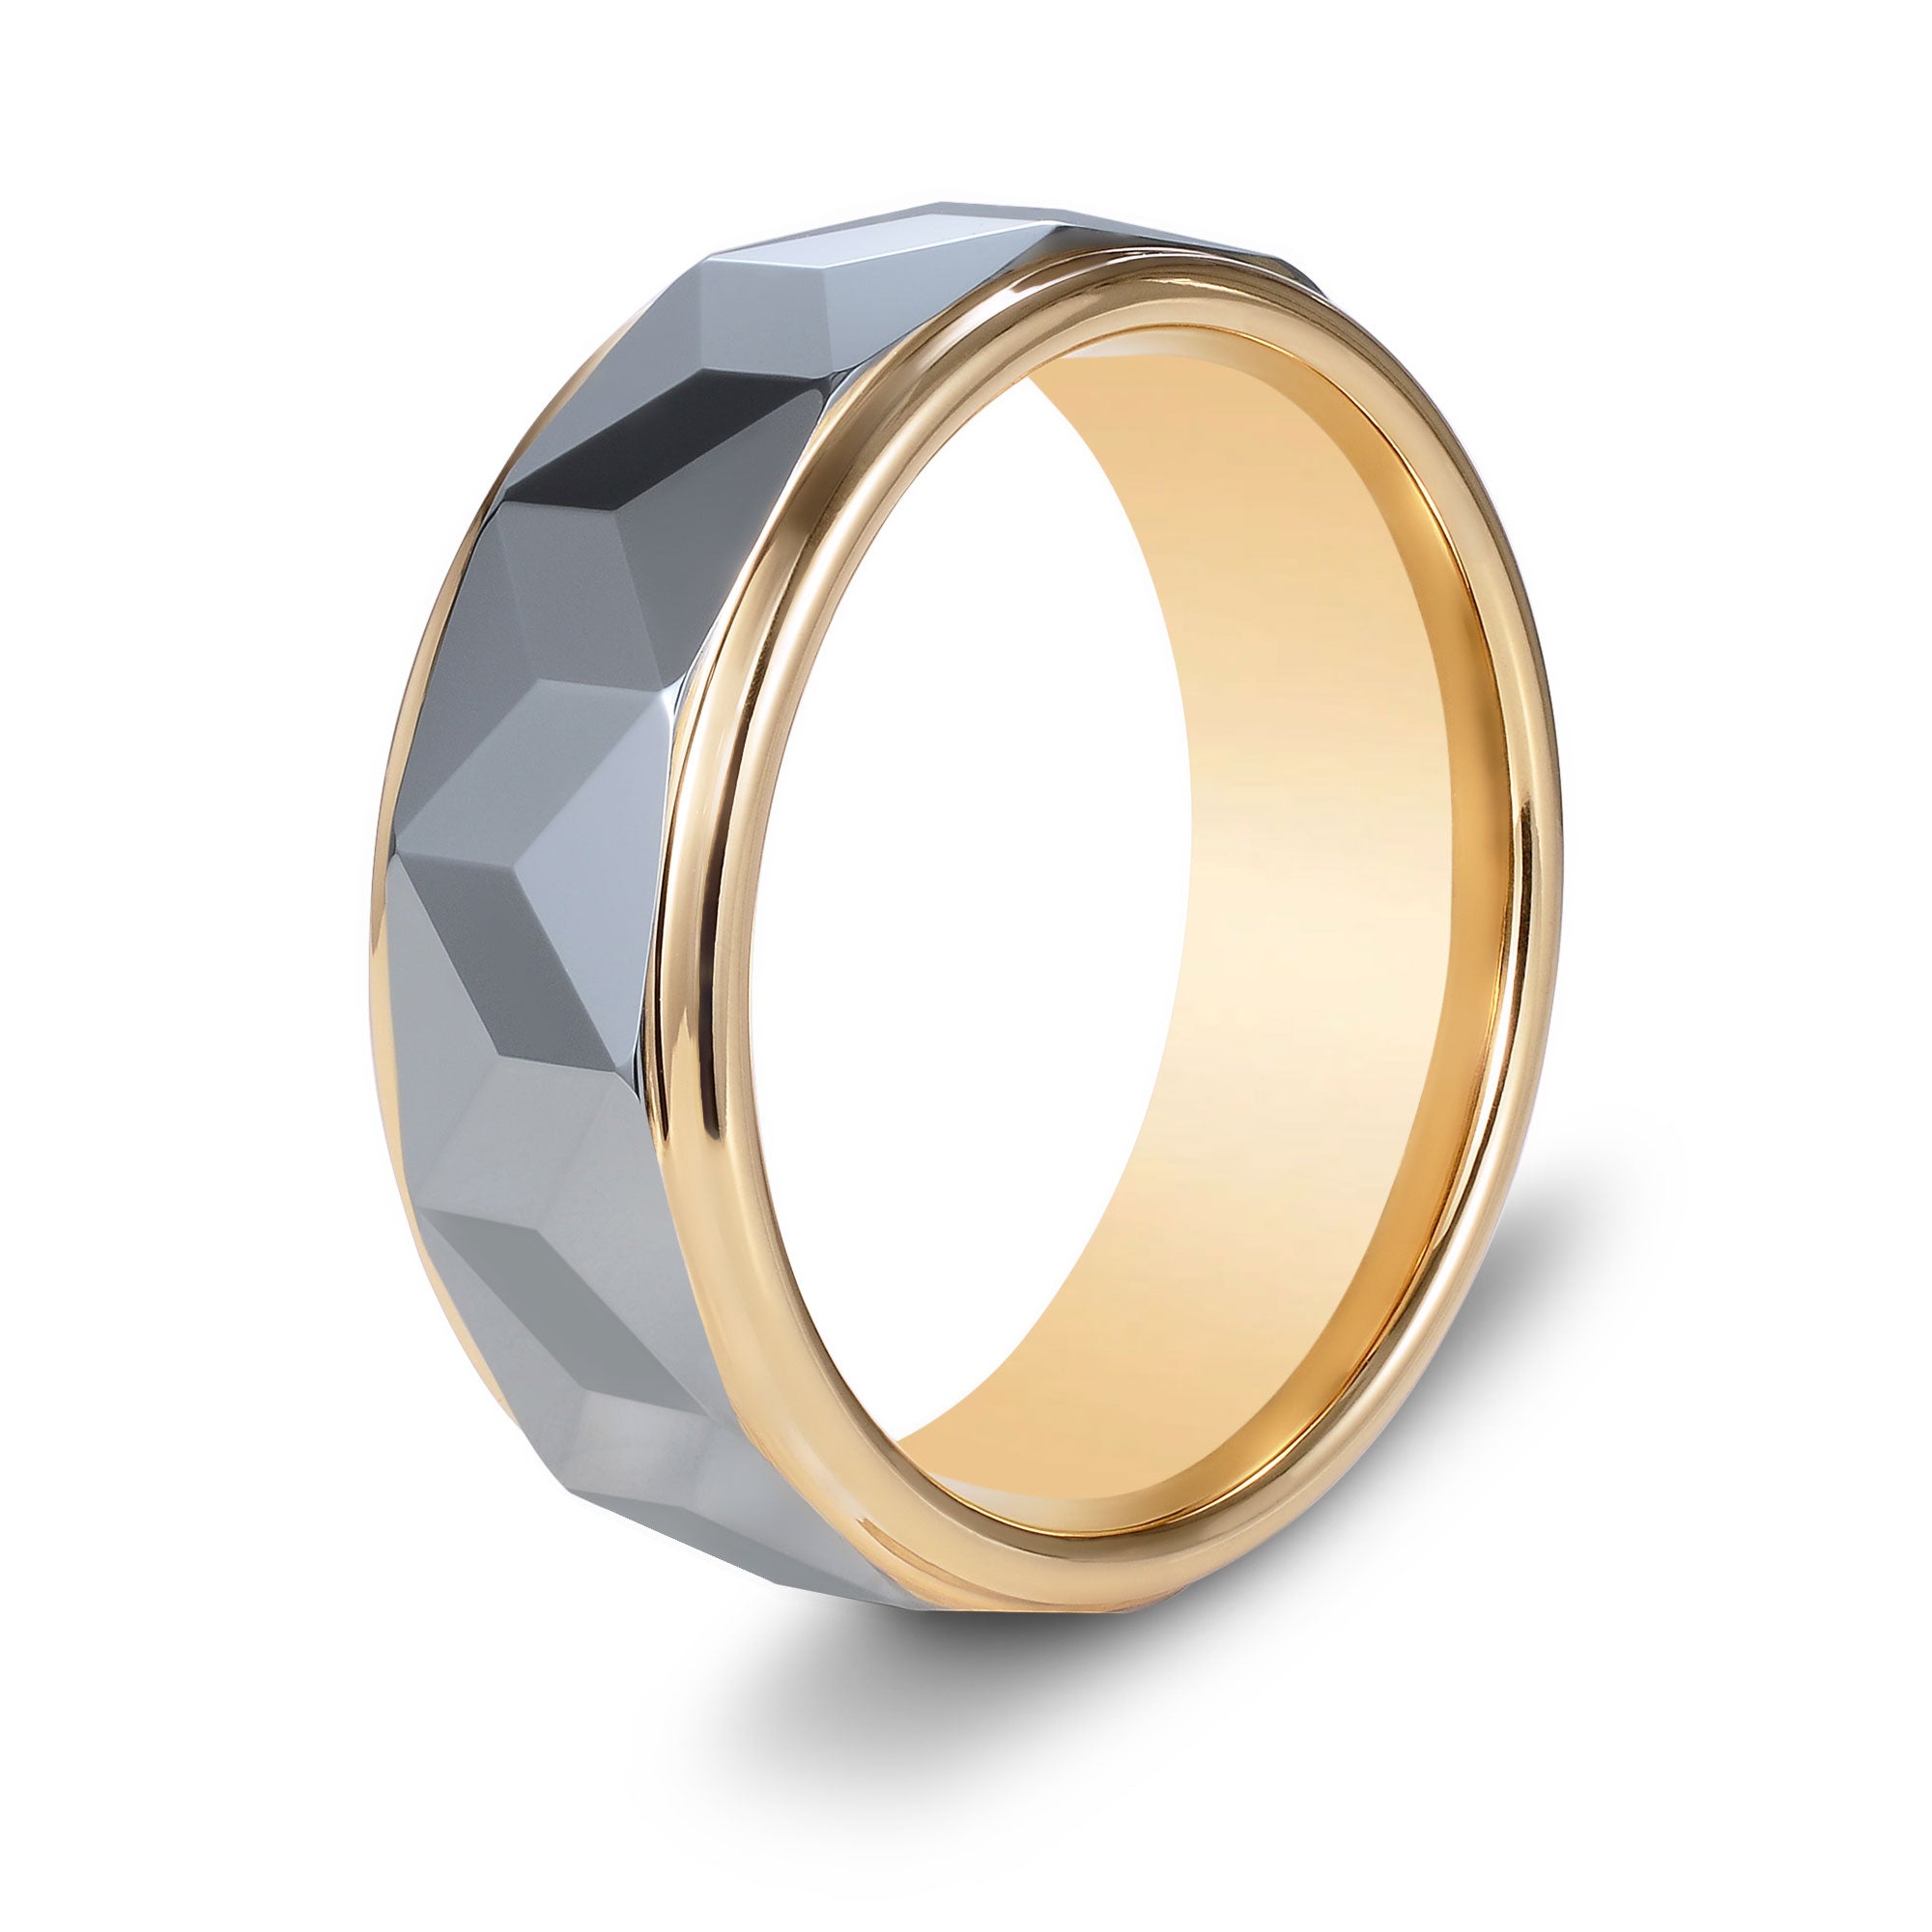 The Rockstar - Gold & Silver Tungsten Gloss Finish Ring